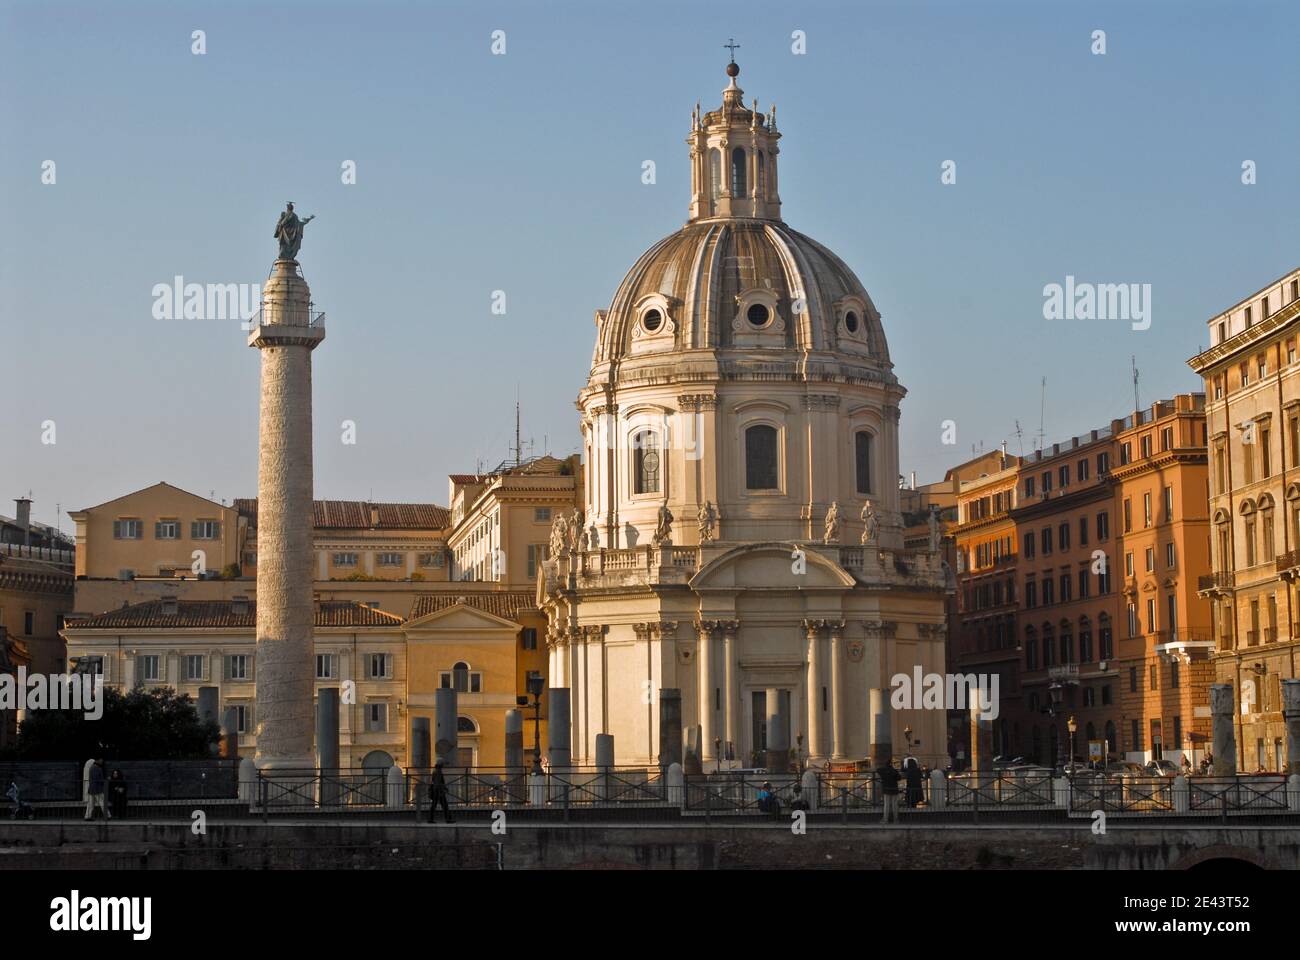 Trajan's Forum: Trajan's Column and Santissimo Nome di Maria al Foro Traiano church. Rome, Italy Stock Photo